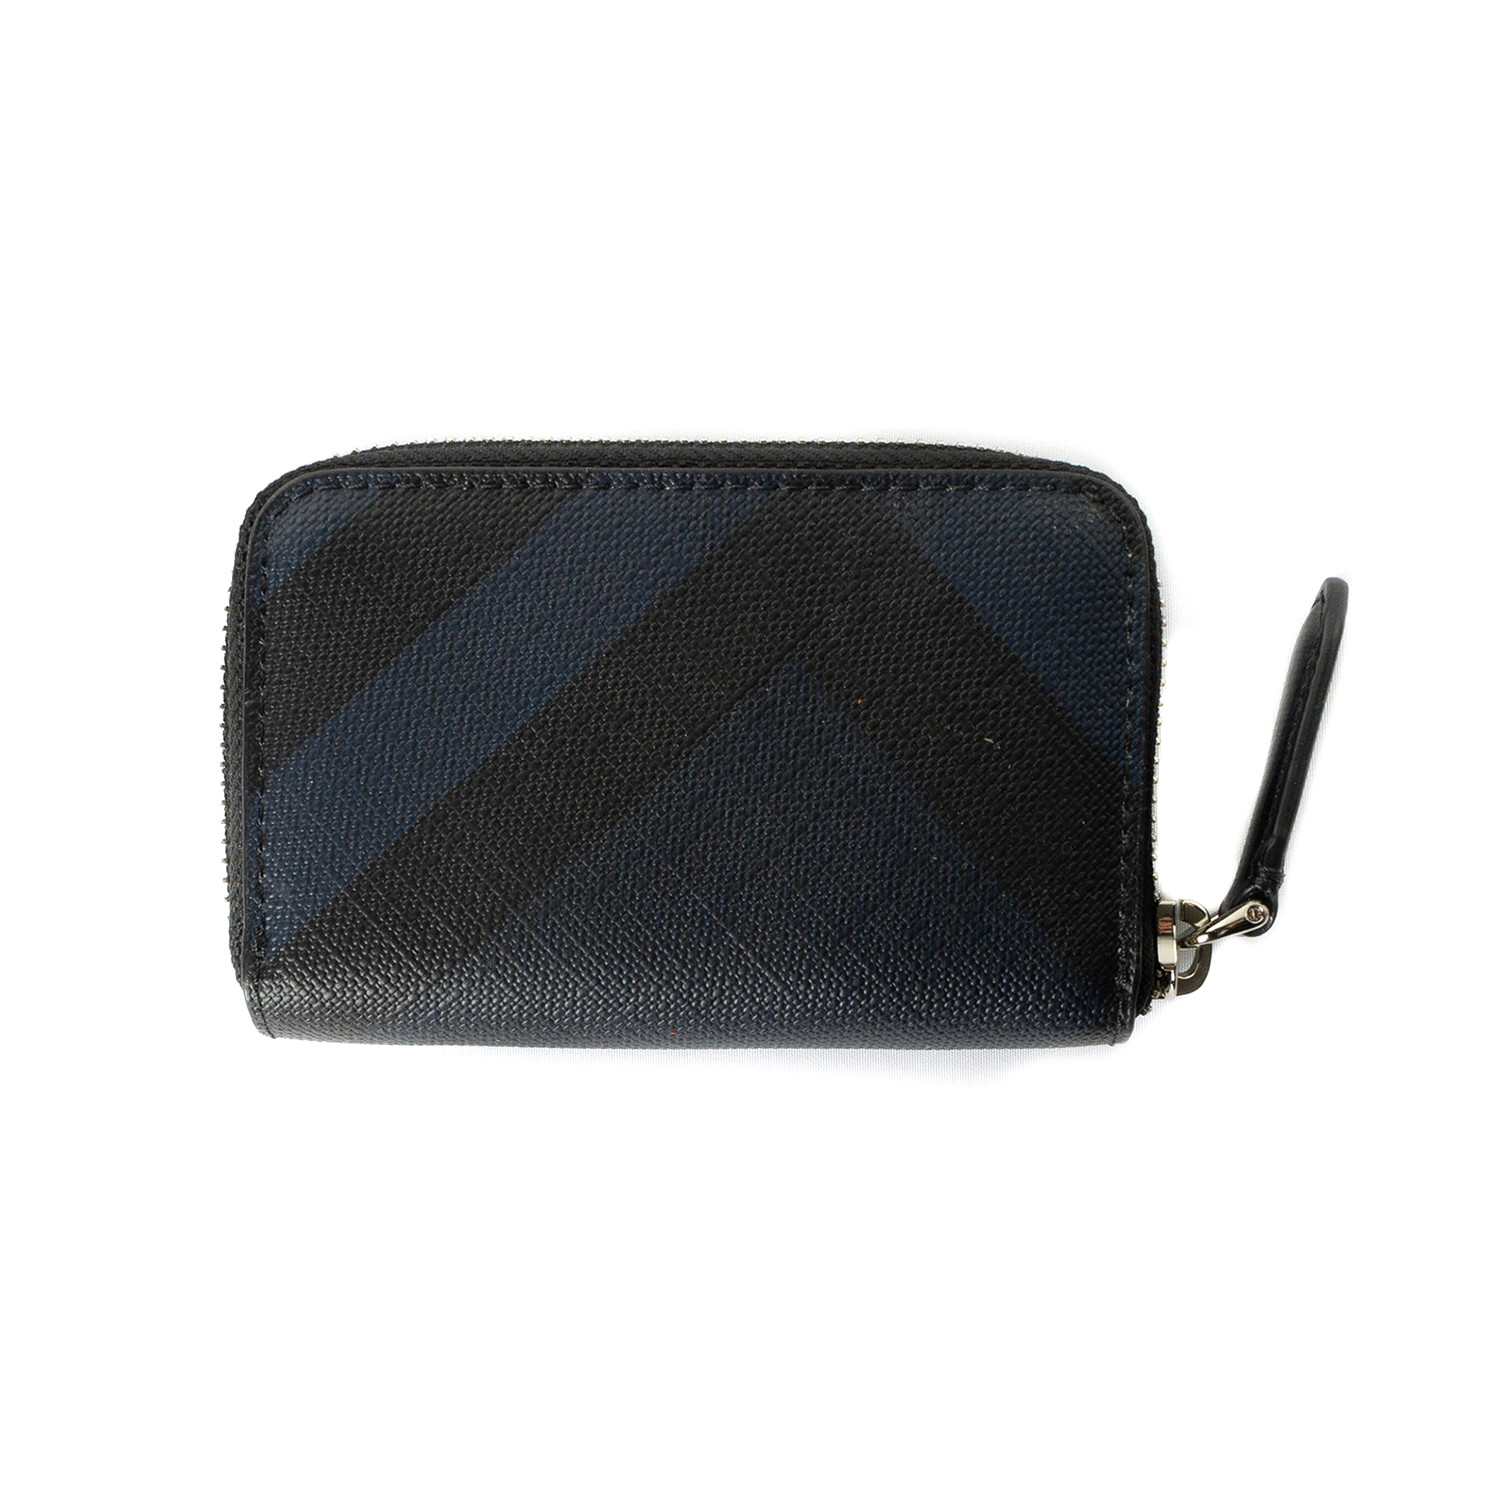 Small Zipper Wallet // Navy + Black - Burberry - Touch of Modern